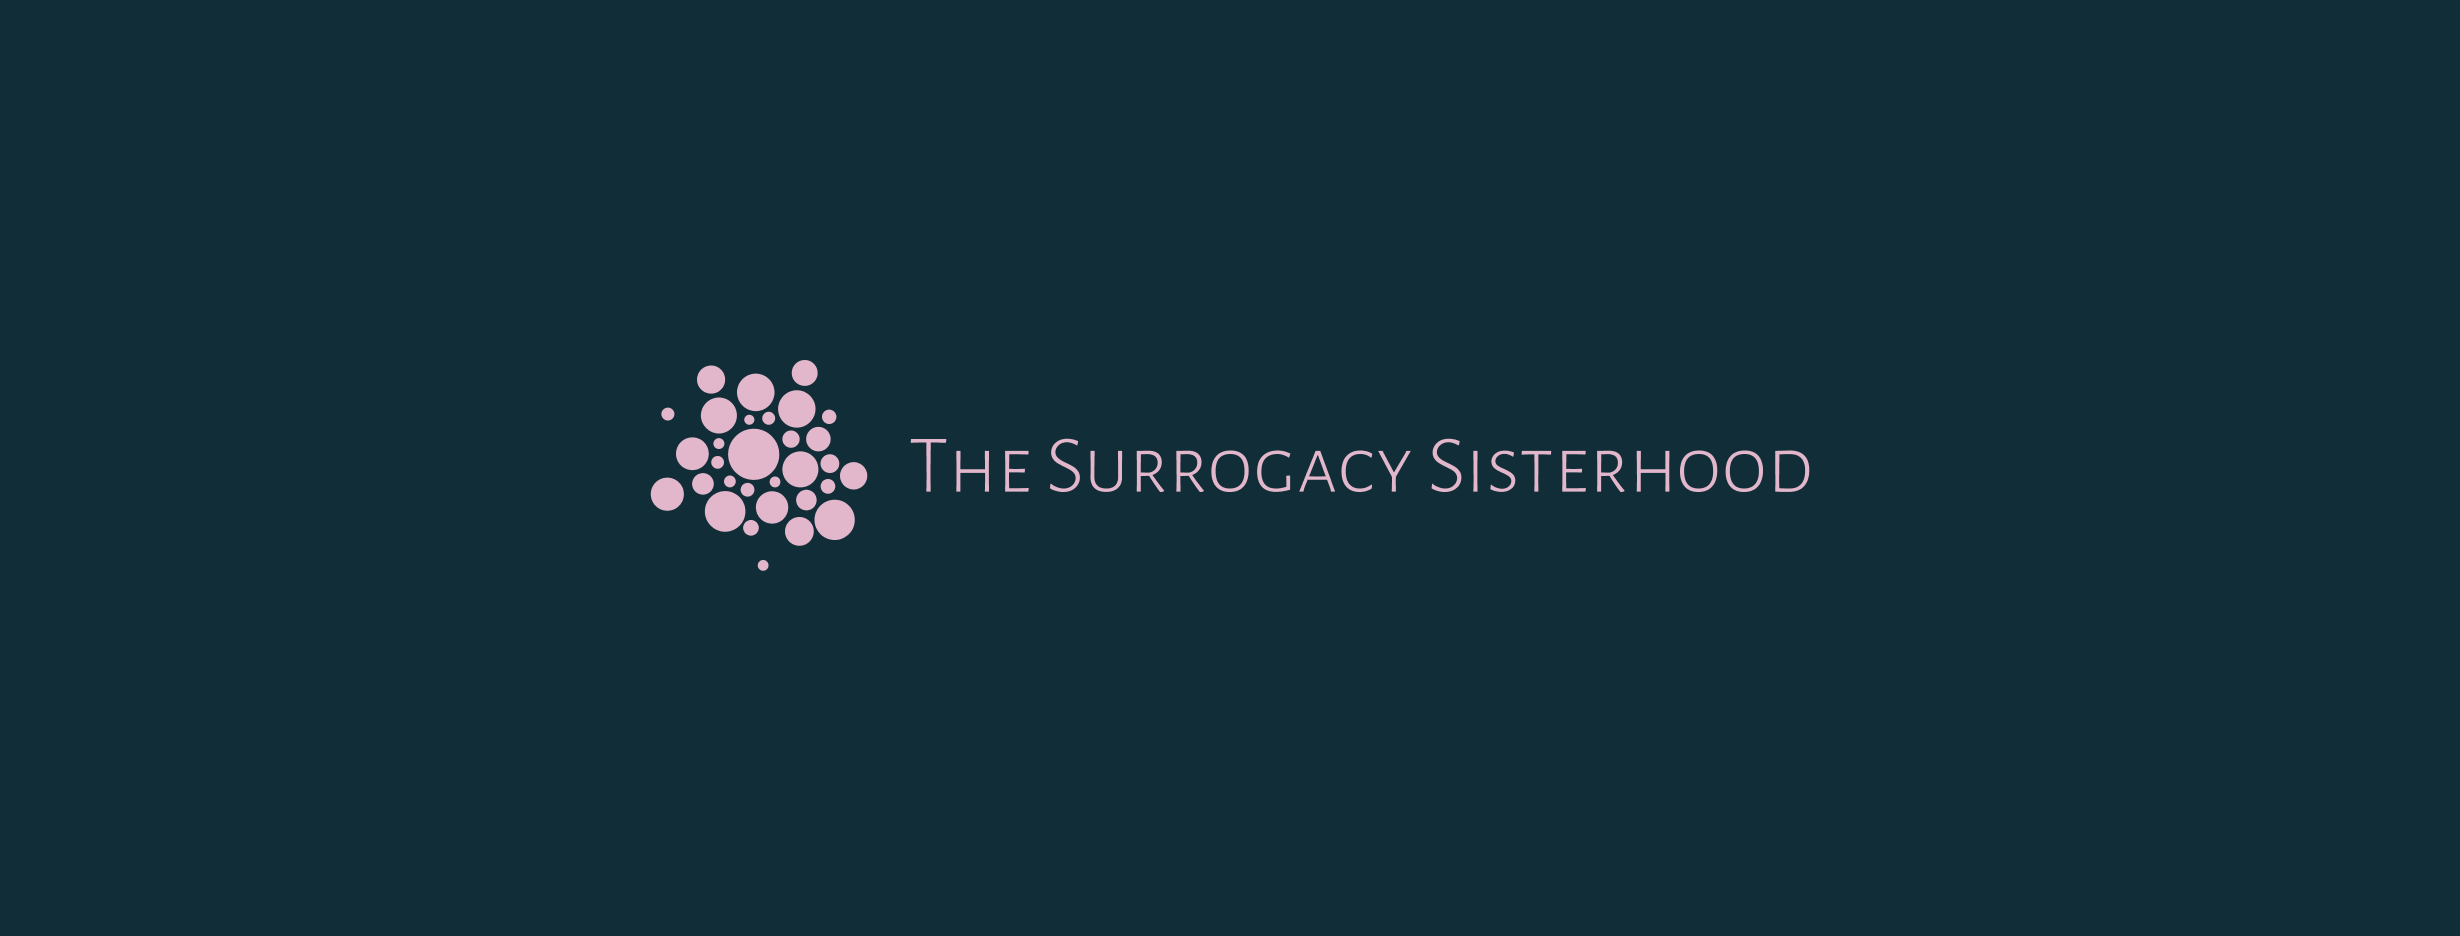 surrogacy sisterhood